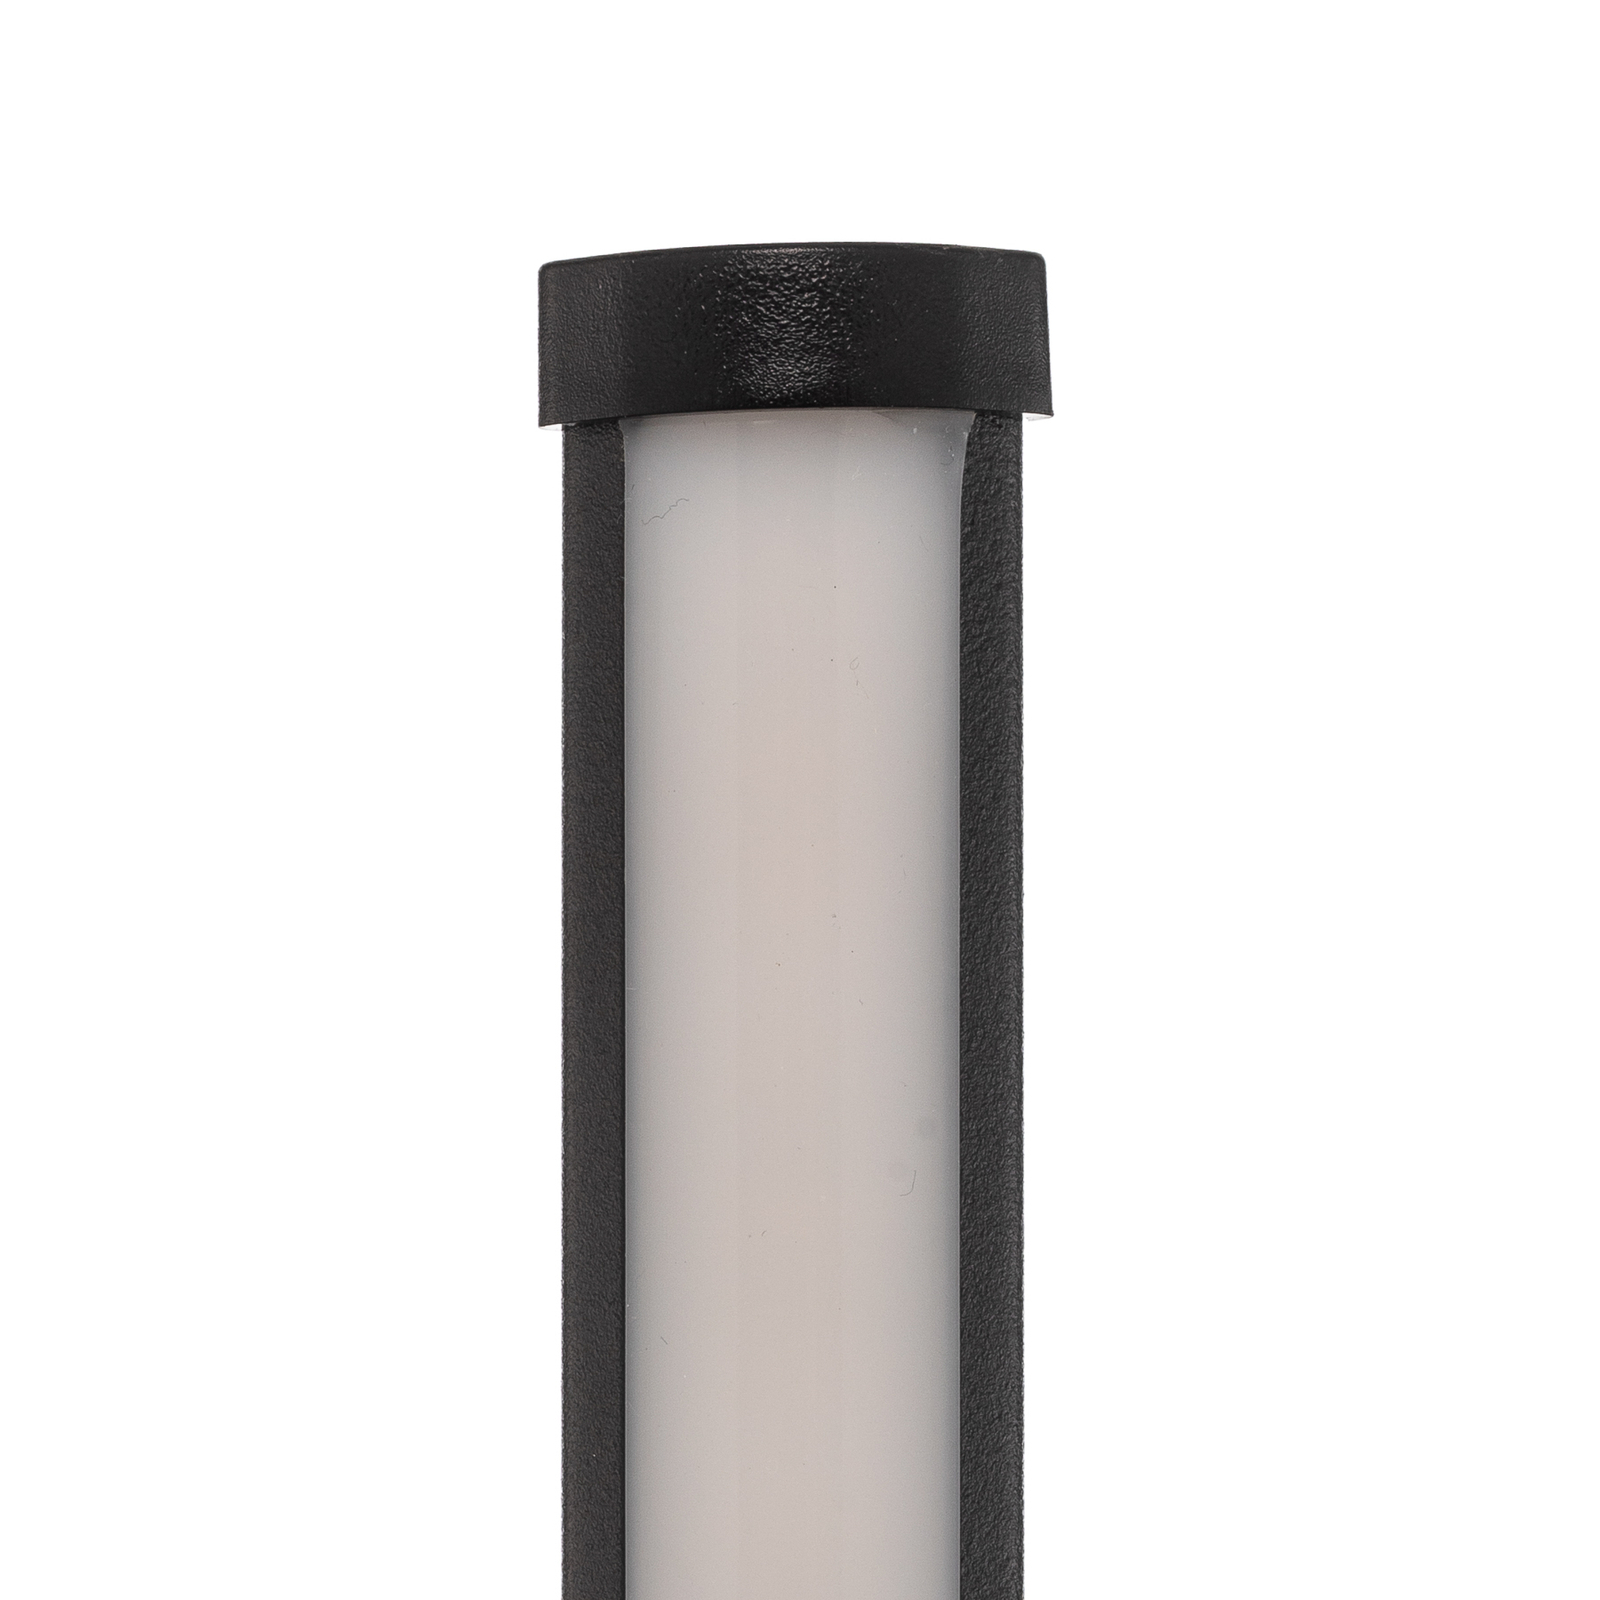 Prios Ledion lampe décorative LED, RVB